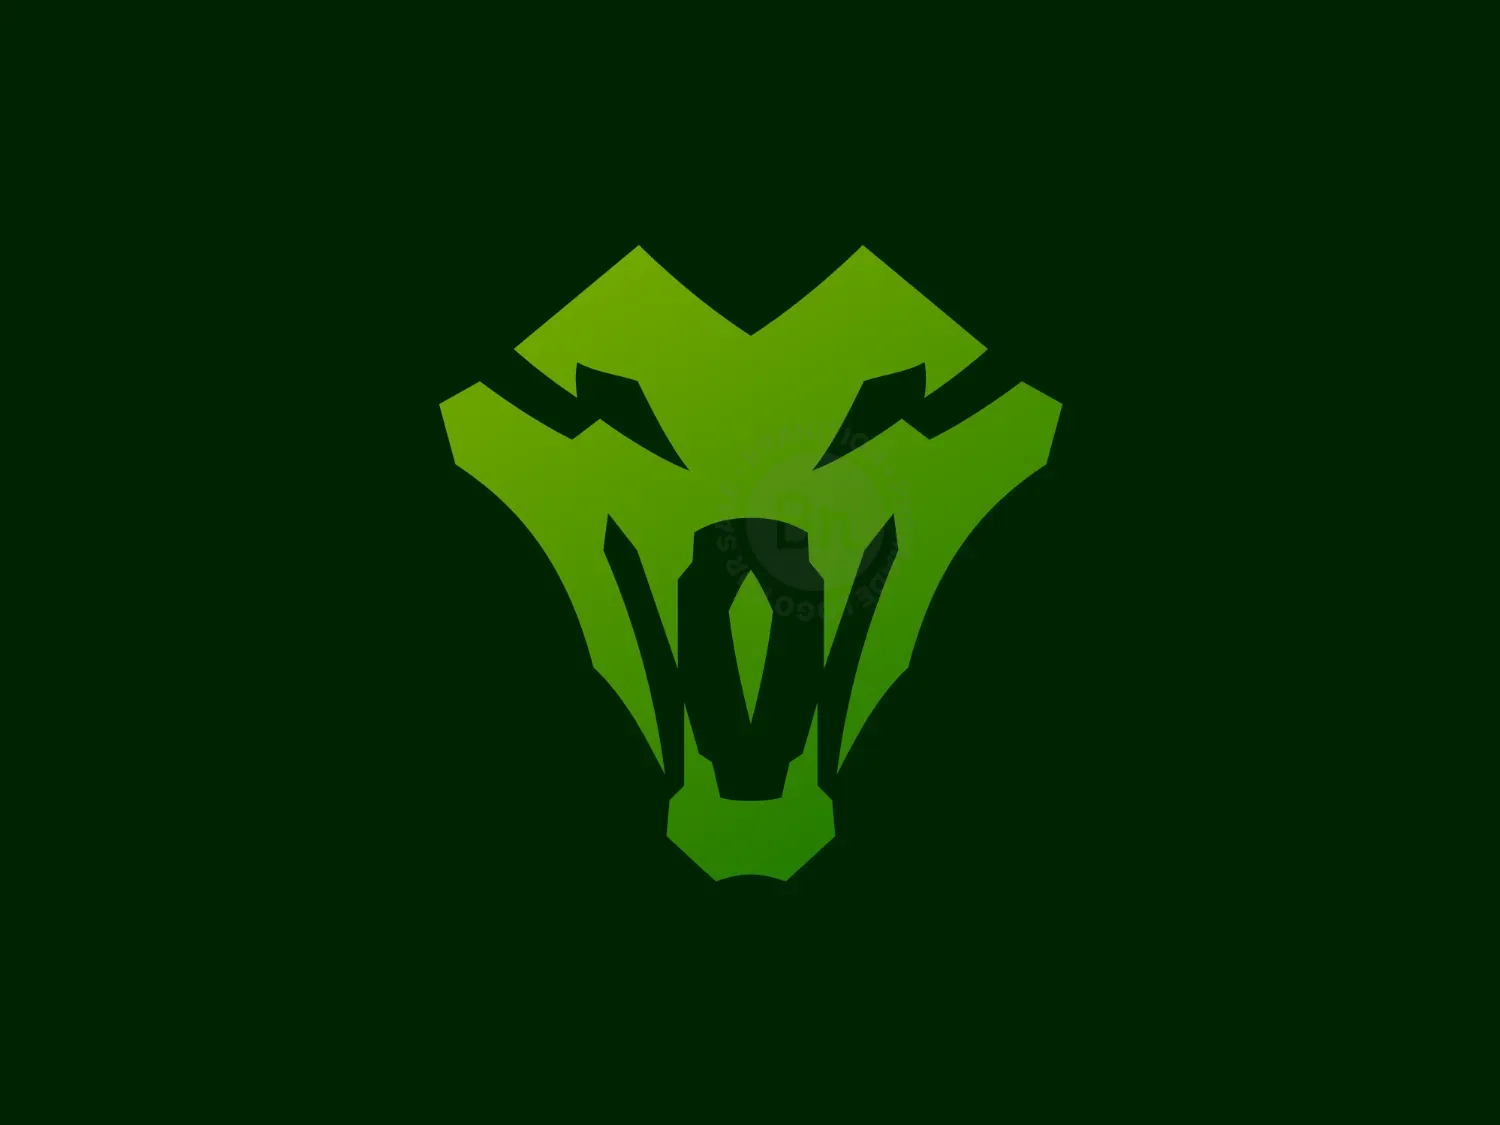 Viper/Snake Head Abstract Gaming And Sports Logo Design